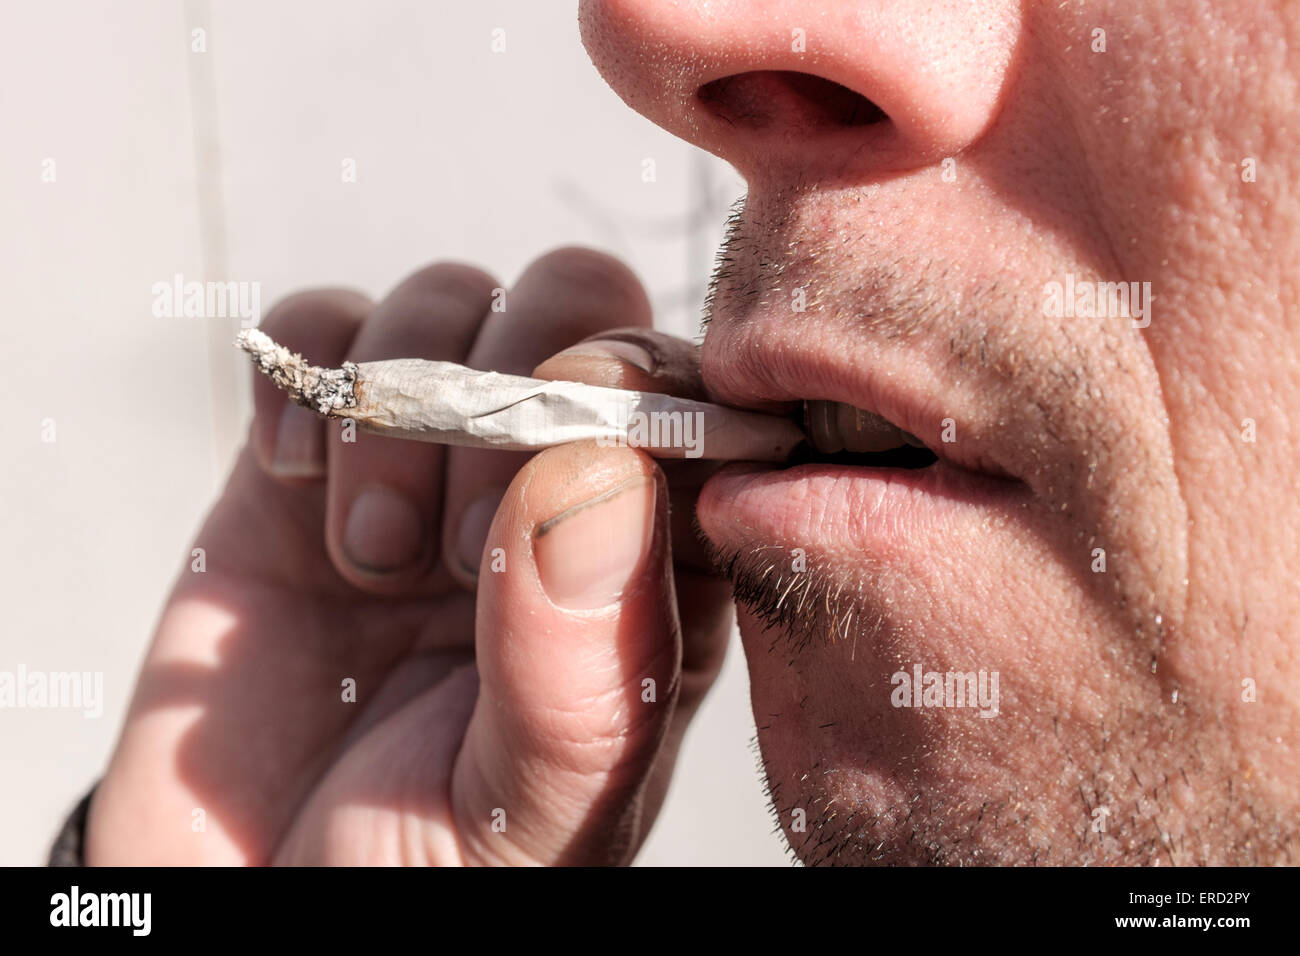 Man smoking a joint Stock Photo